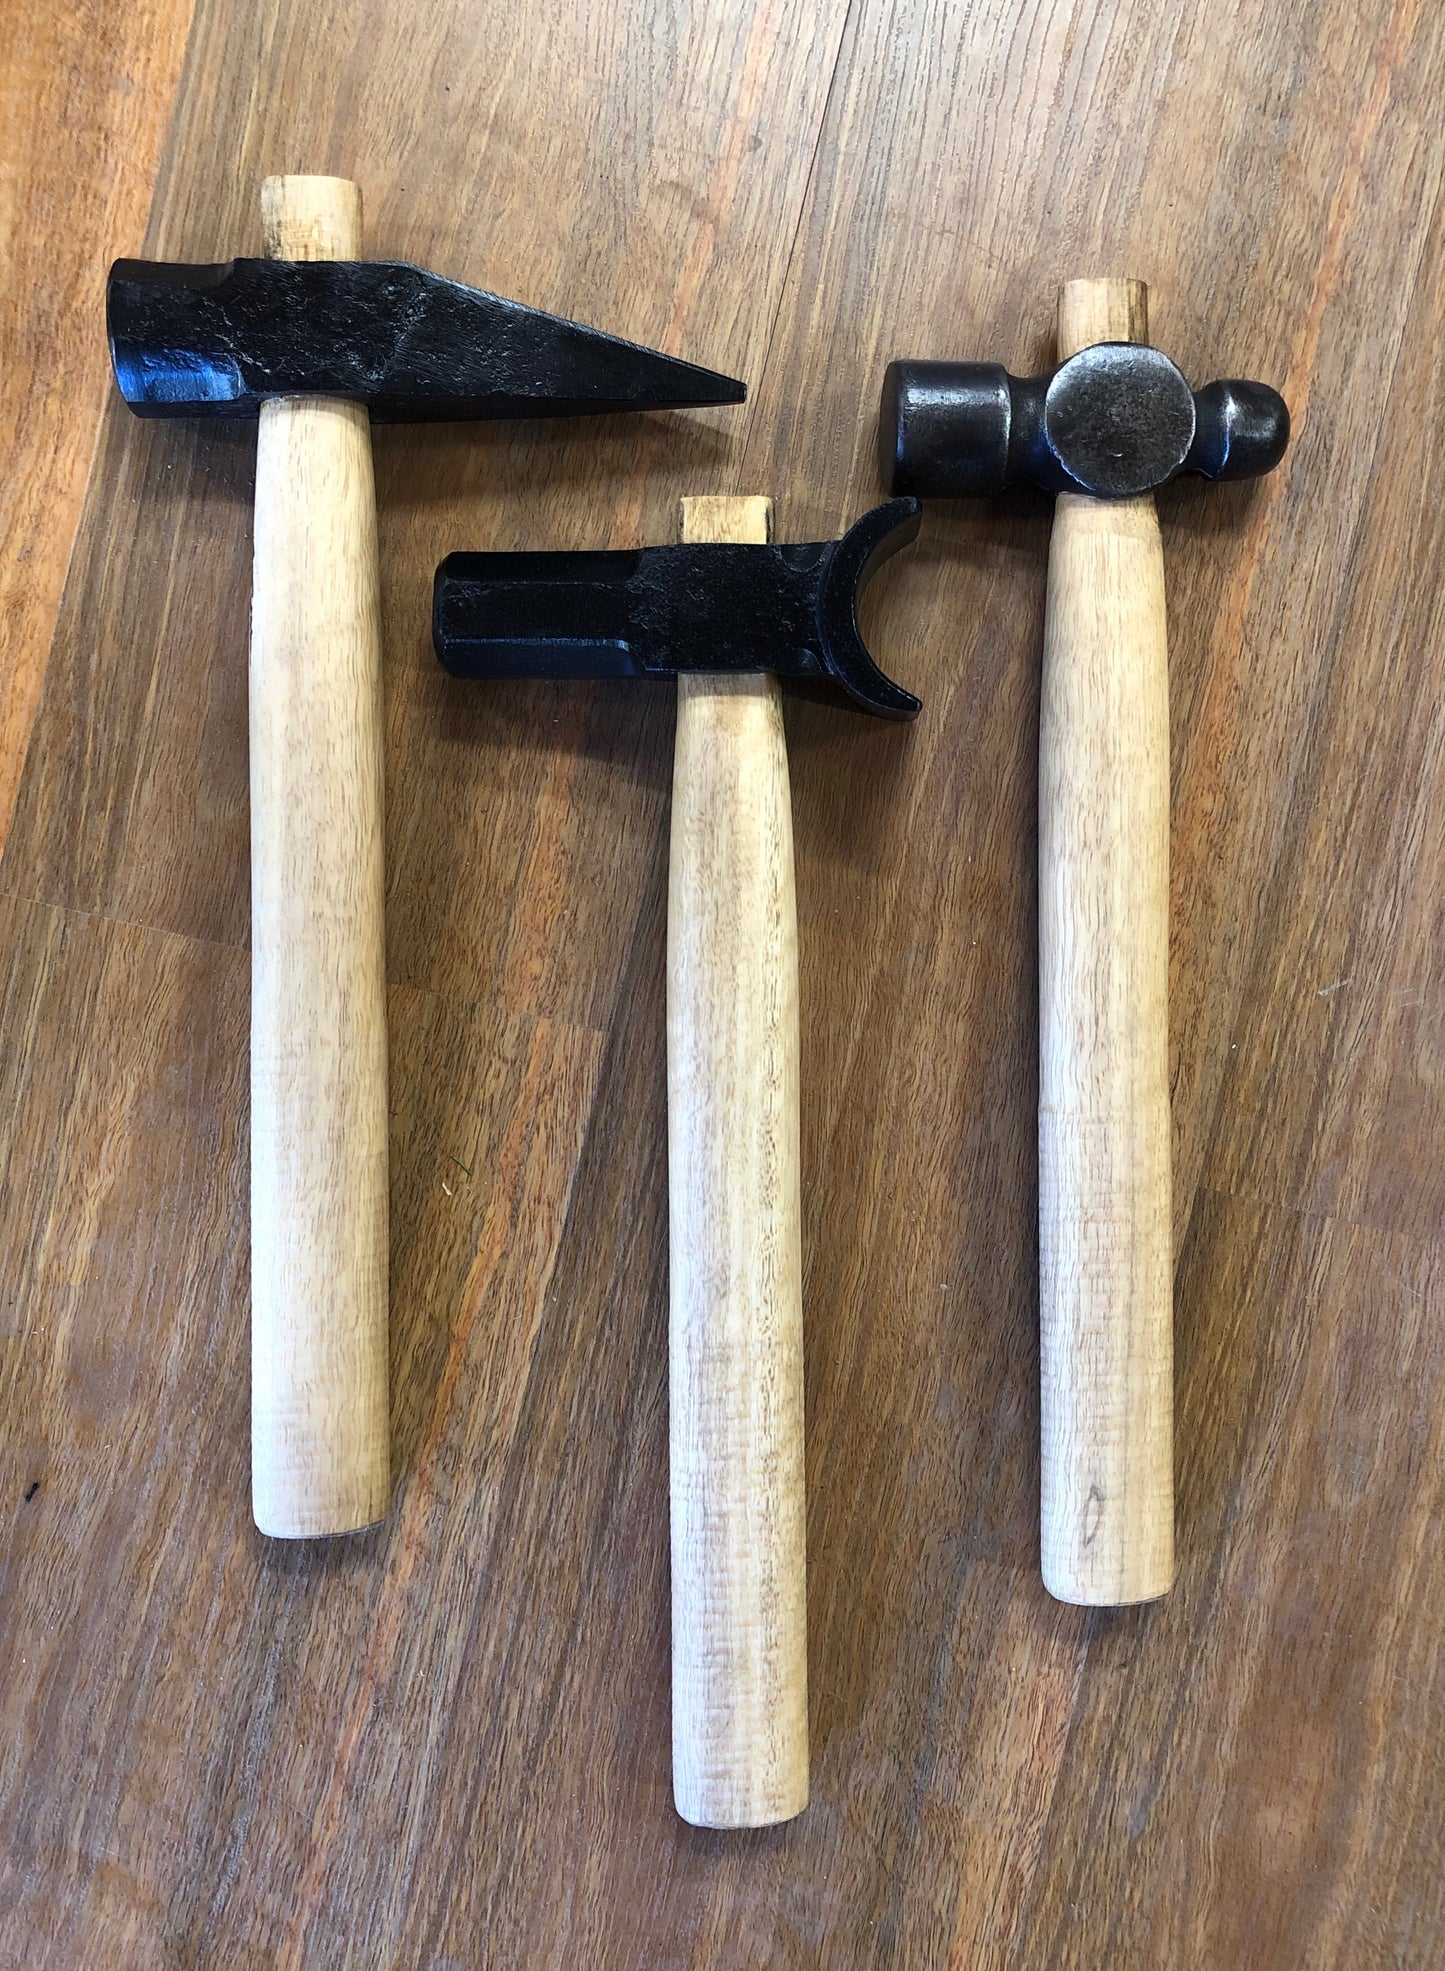 Blacksmith/Boilermaker Hammer/tool. Peining hammer handle